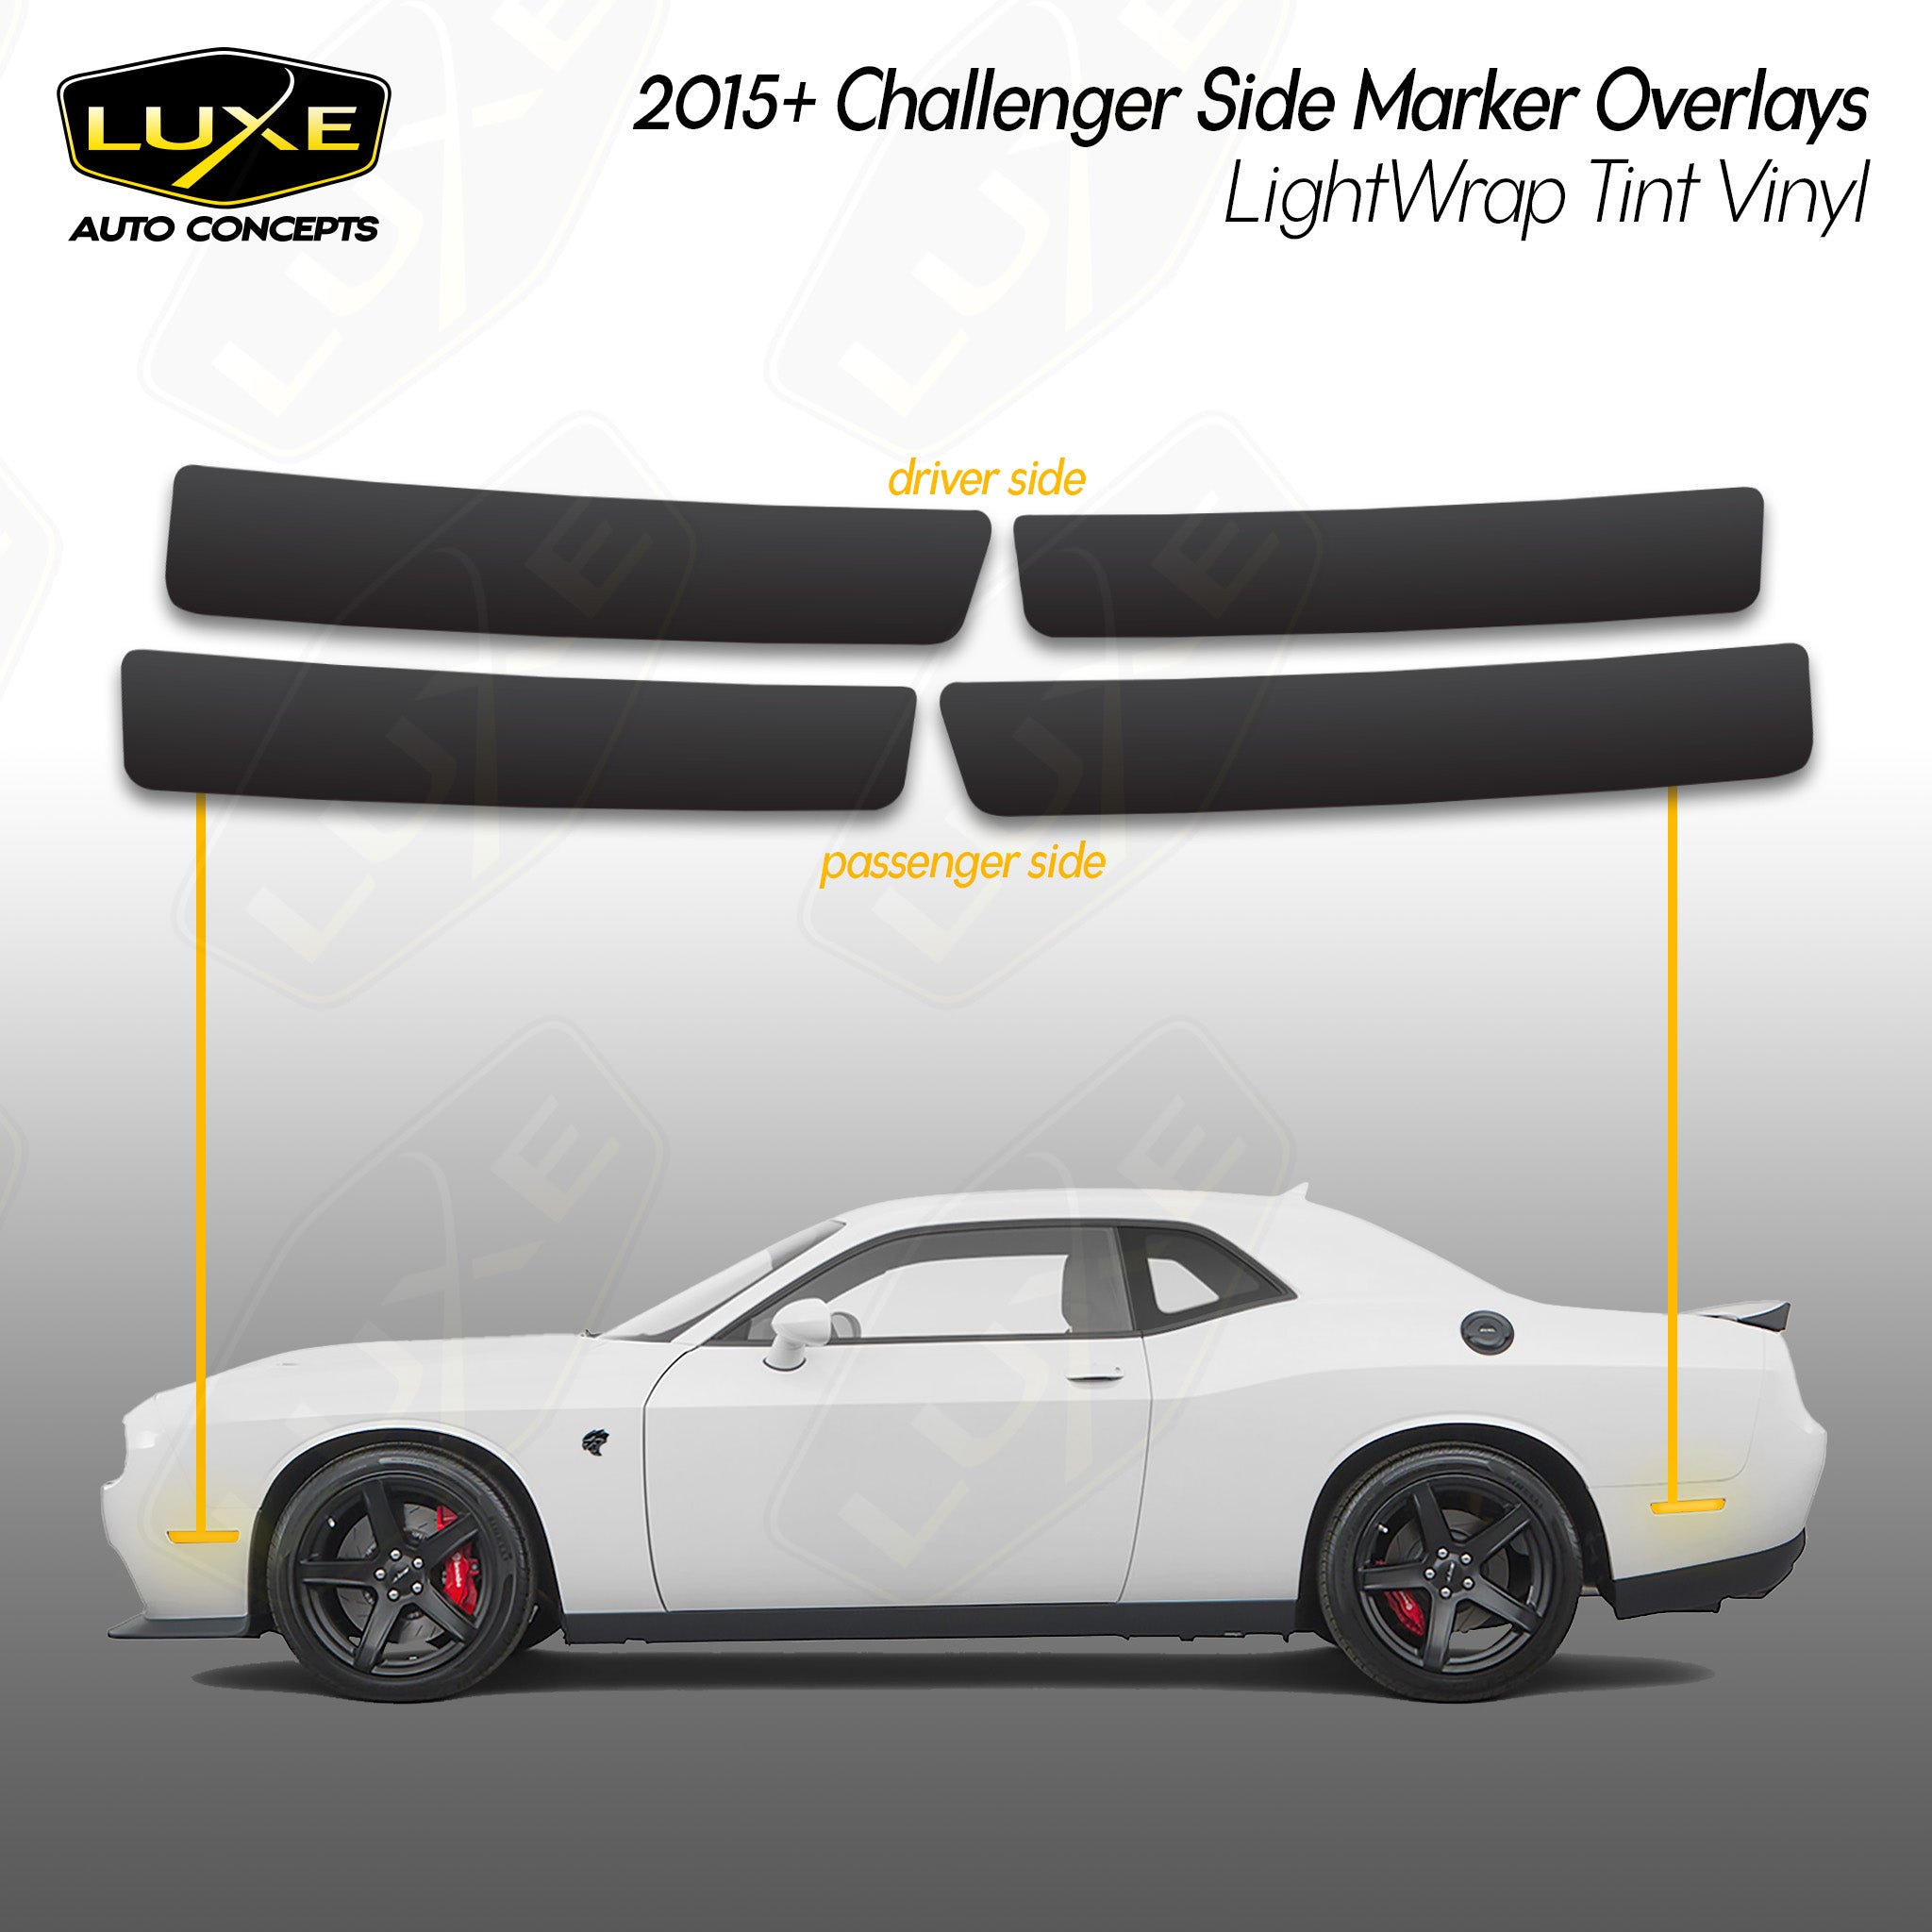 2015 Challenger Side Marker Overlays LightWrap Tint Vinyl AUTO CONCEPTS 